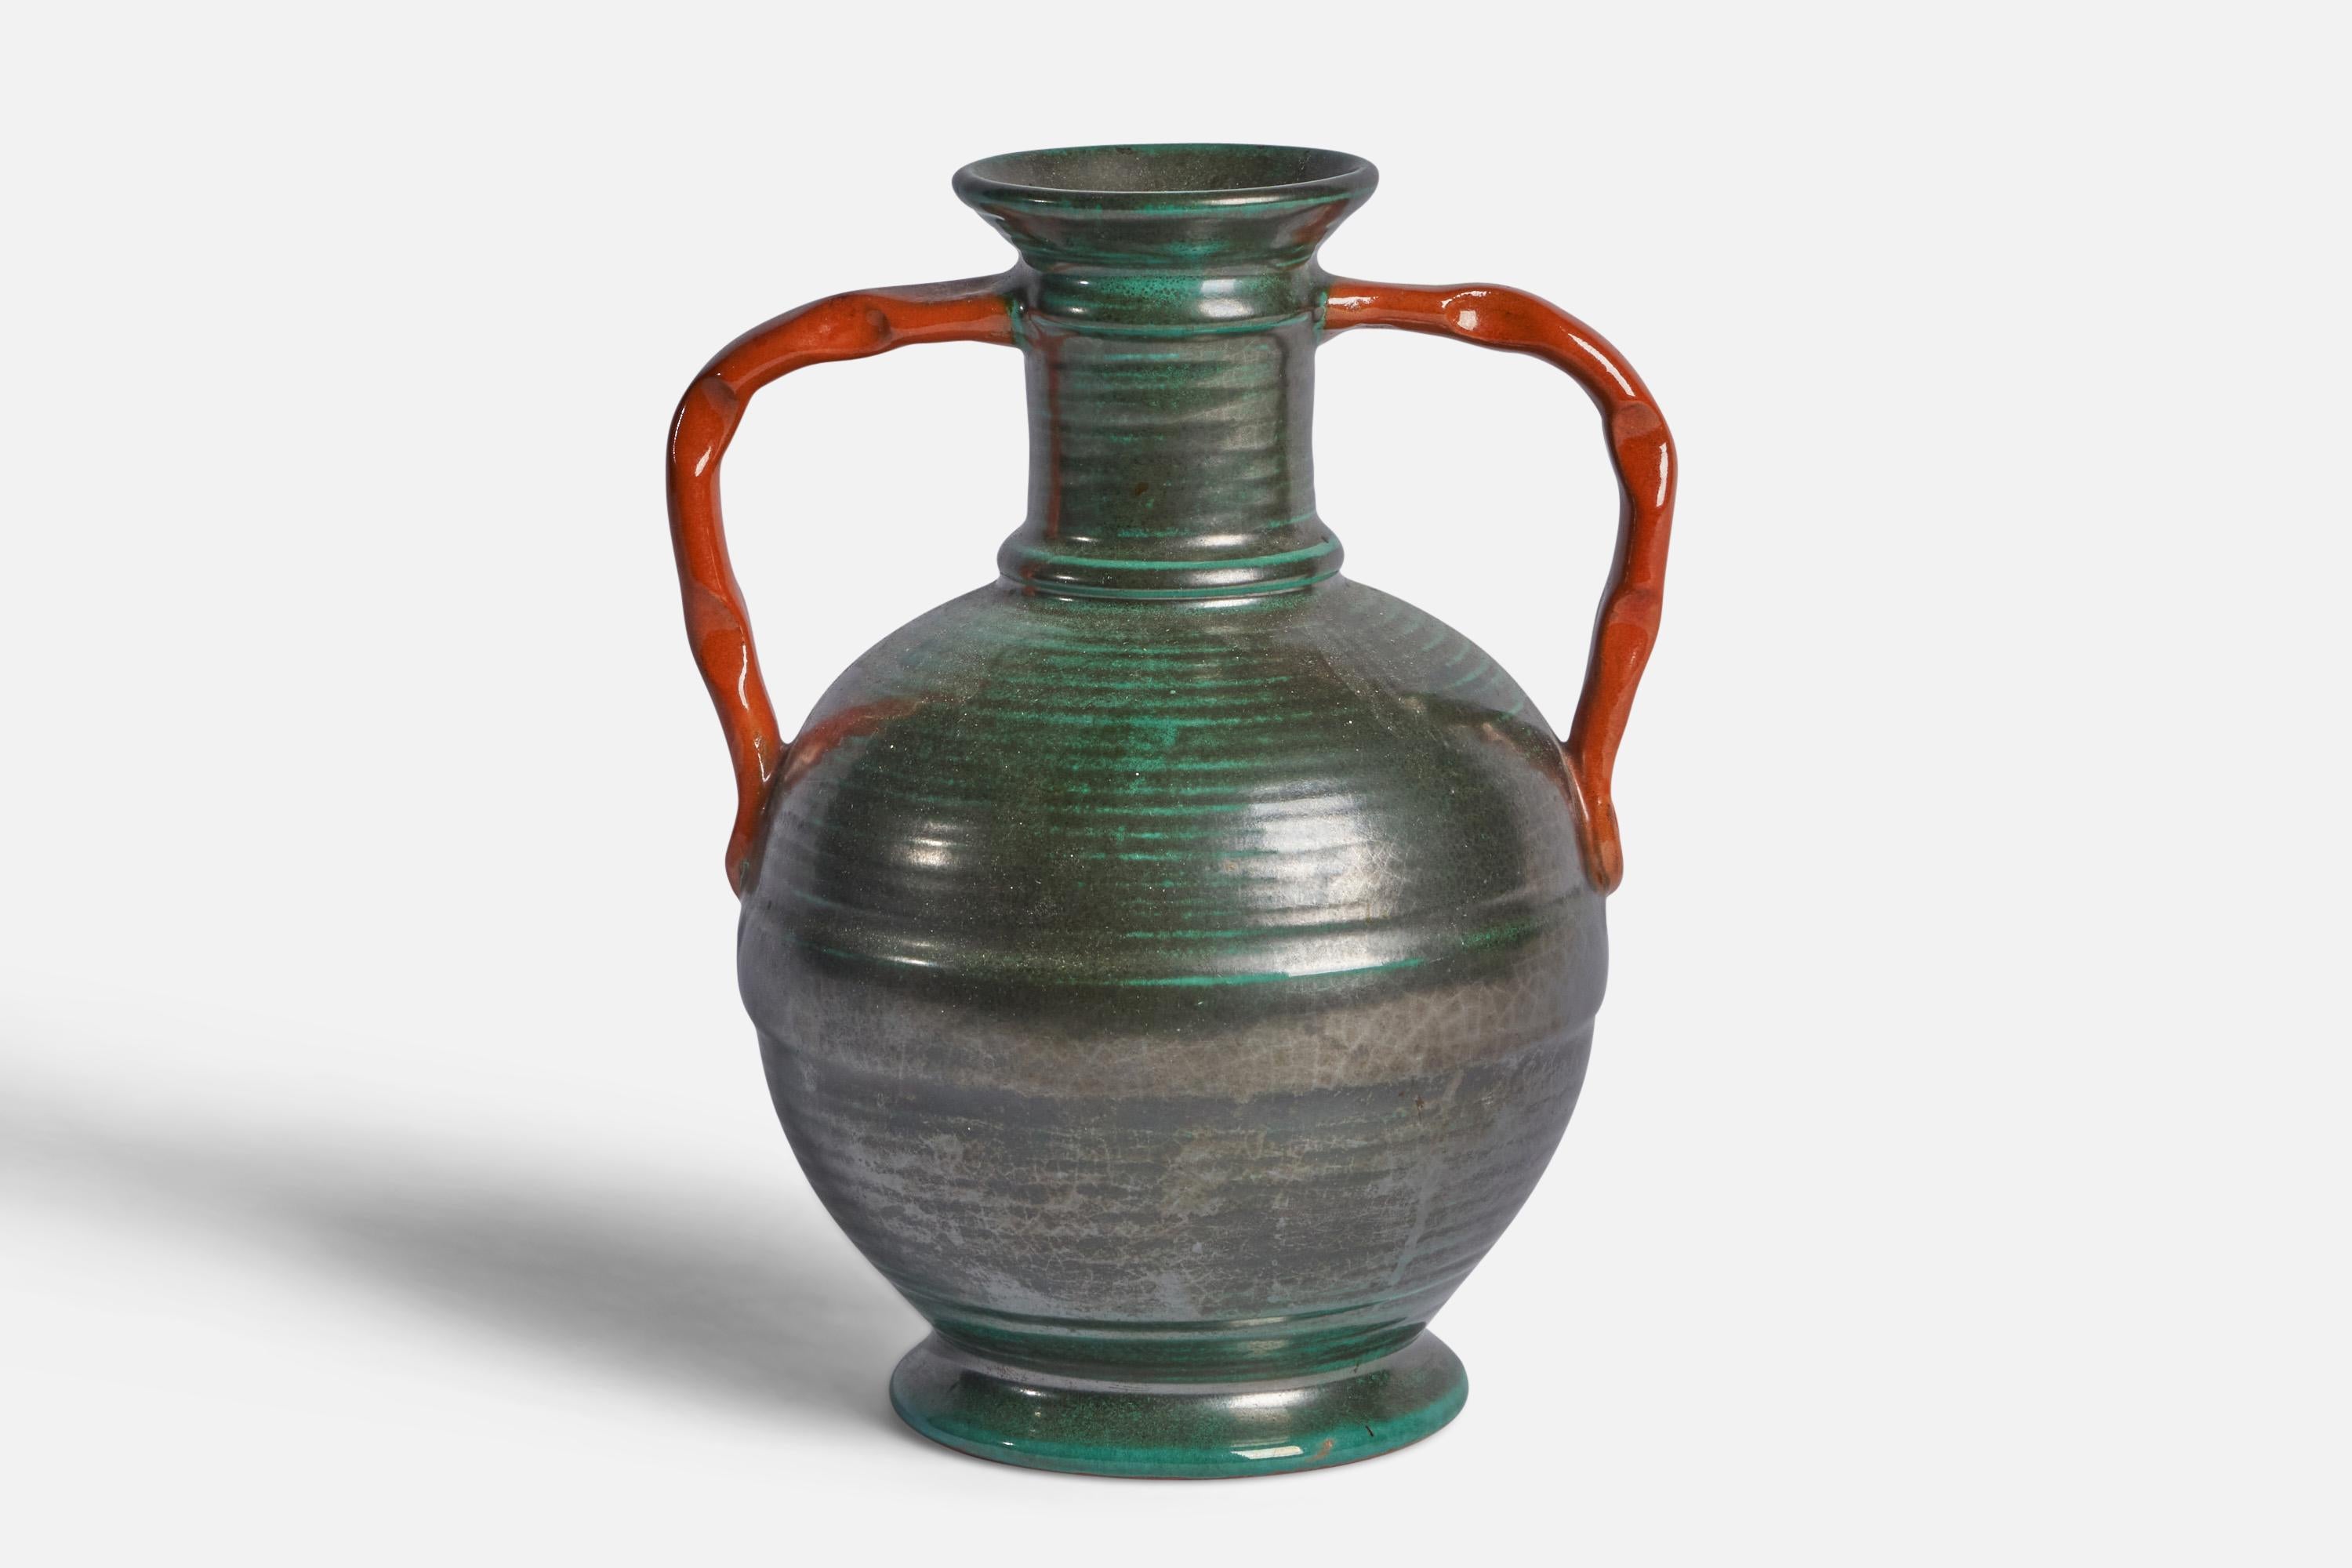 A green and orange-glazed earthenware vase designed and produced by Upsala Ekeby, Sweden, 1930s.